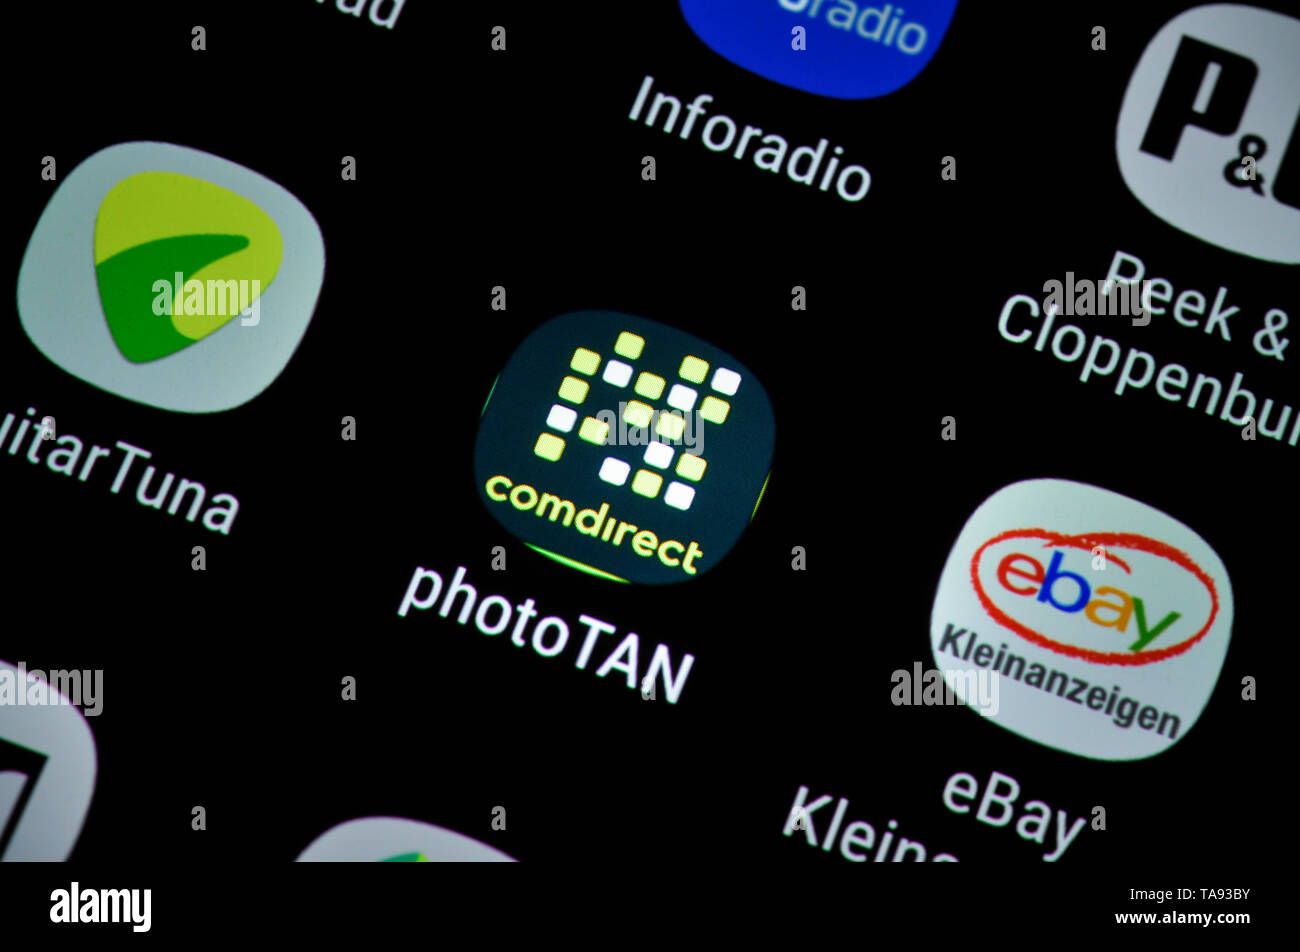 Smartphone, display, ext., comdirect photoTAN, Display, App Stock Photo